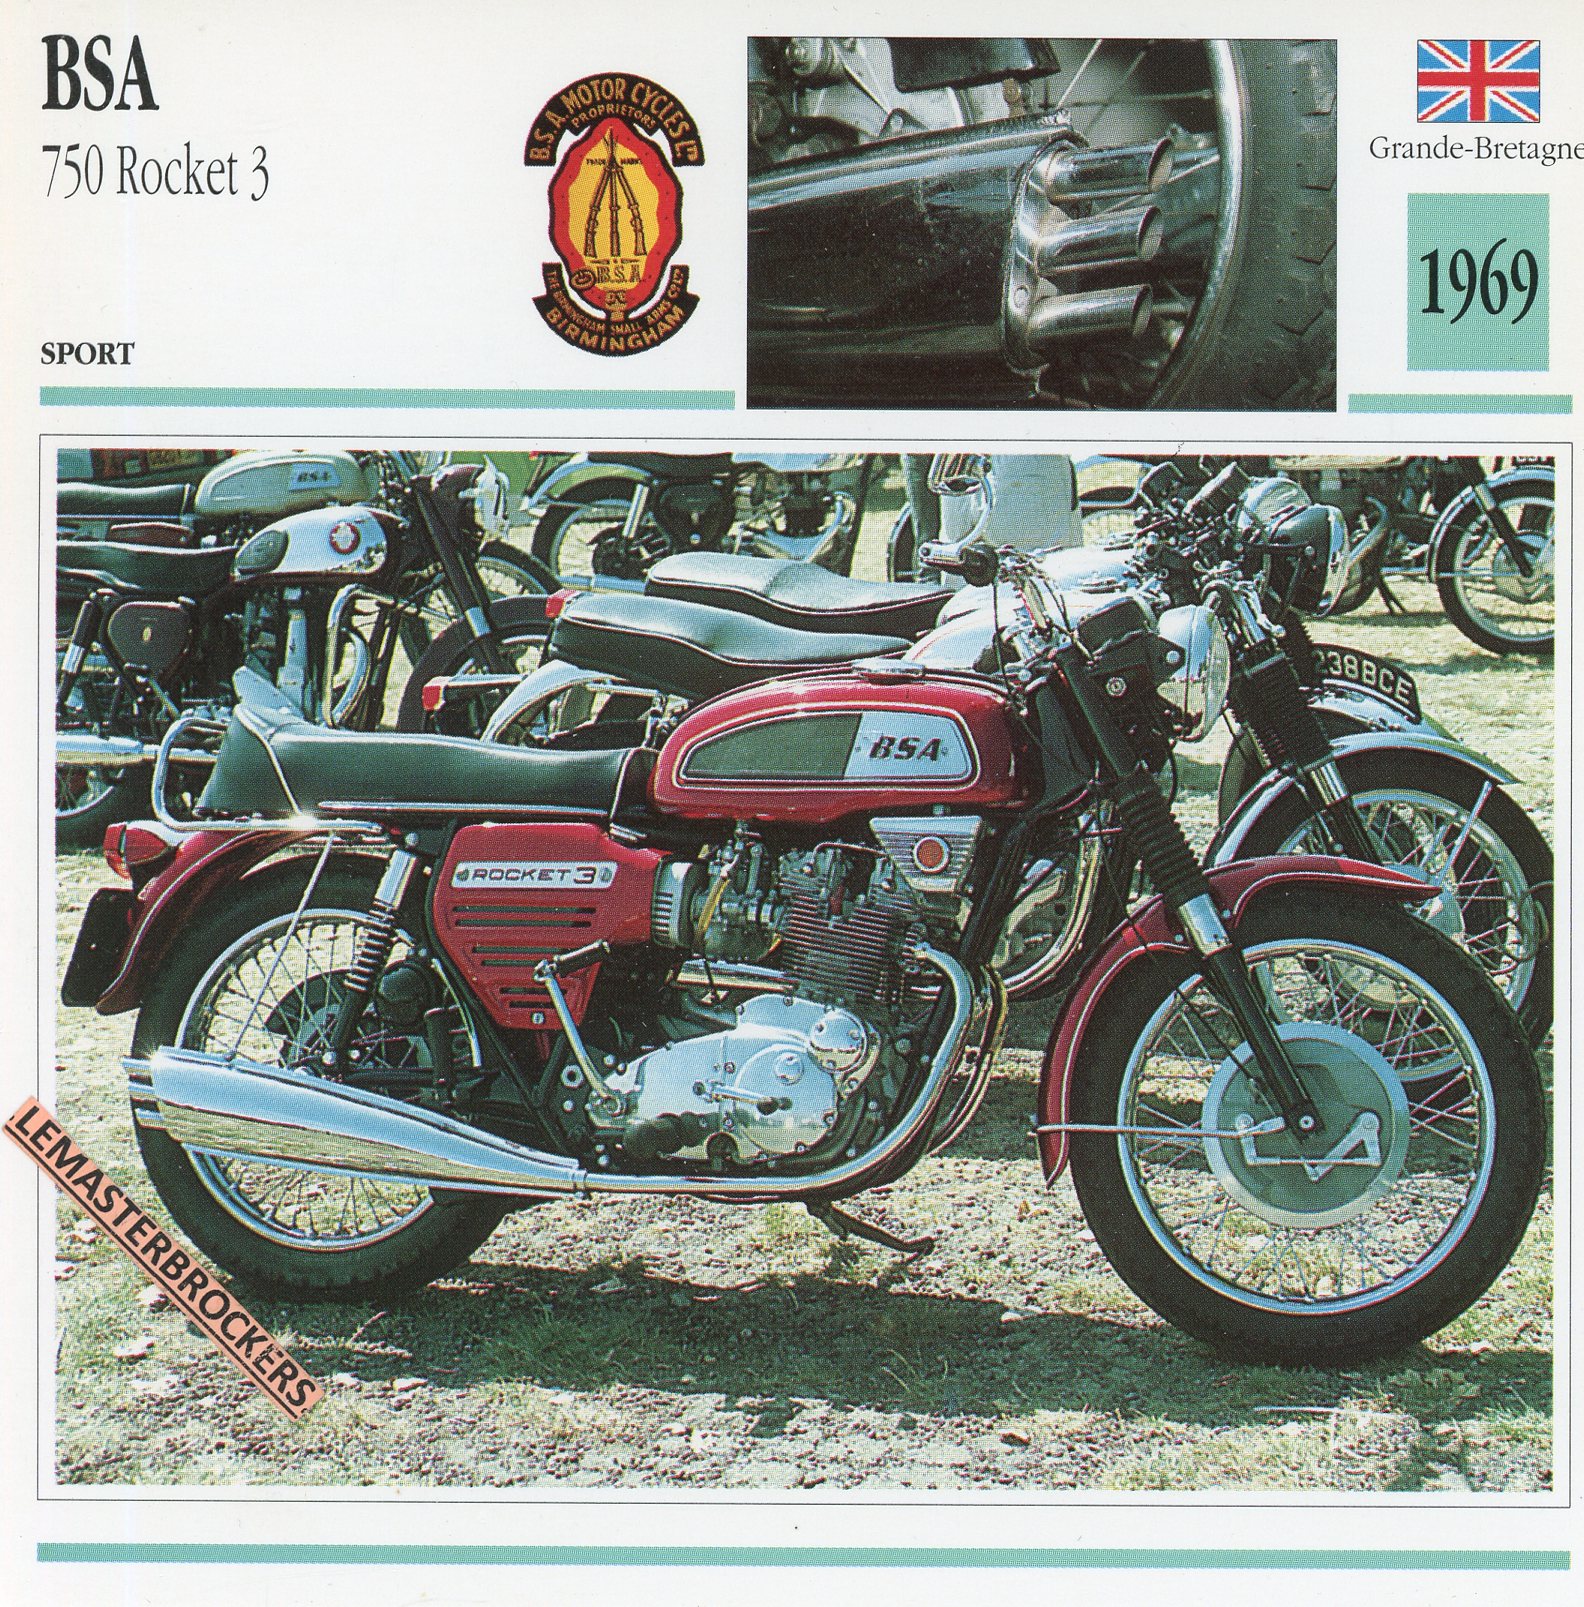 BSA-750-ROCKET-3-1969-FICHE-MOTO-CARDS-ATLAS-LEMASTERBROCKERS